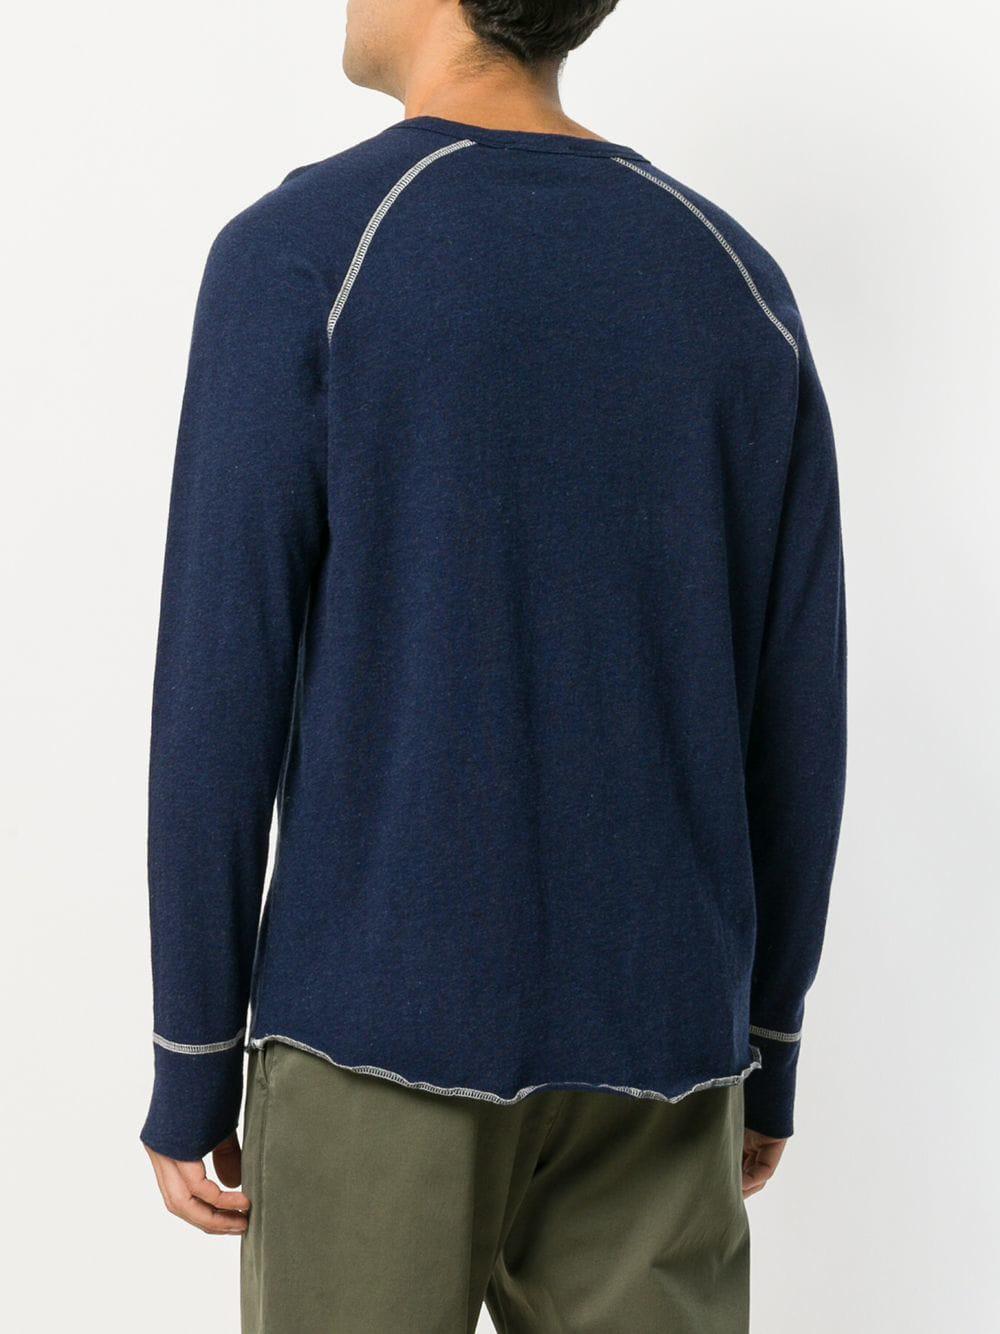 YMC Cotton Crew Neck Sweatshirt in Blue for Men - Lyst